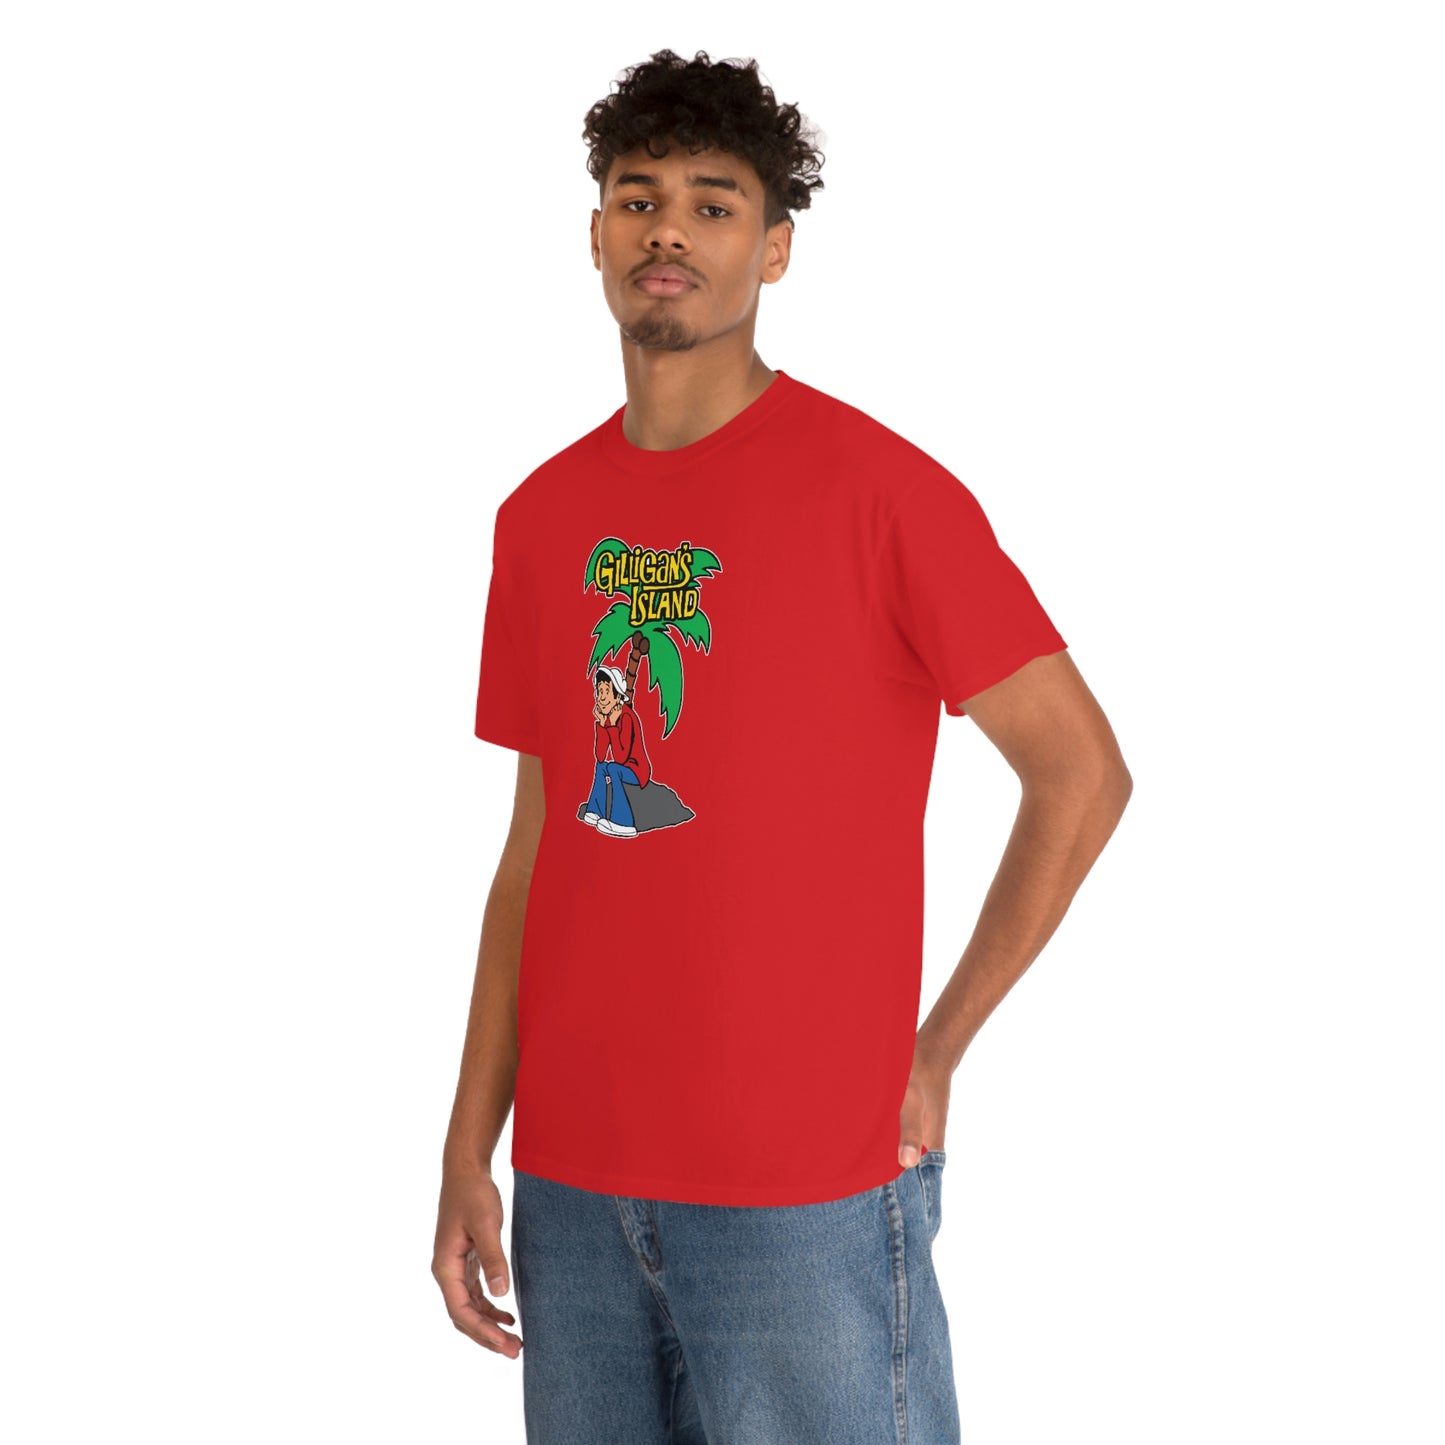 Gilligan's Island T-Shirt